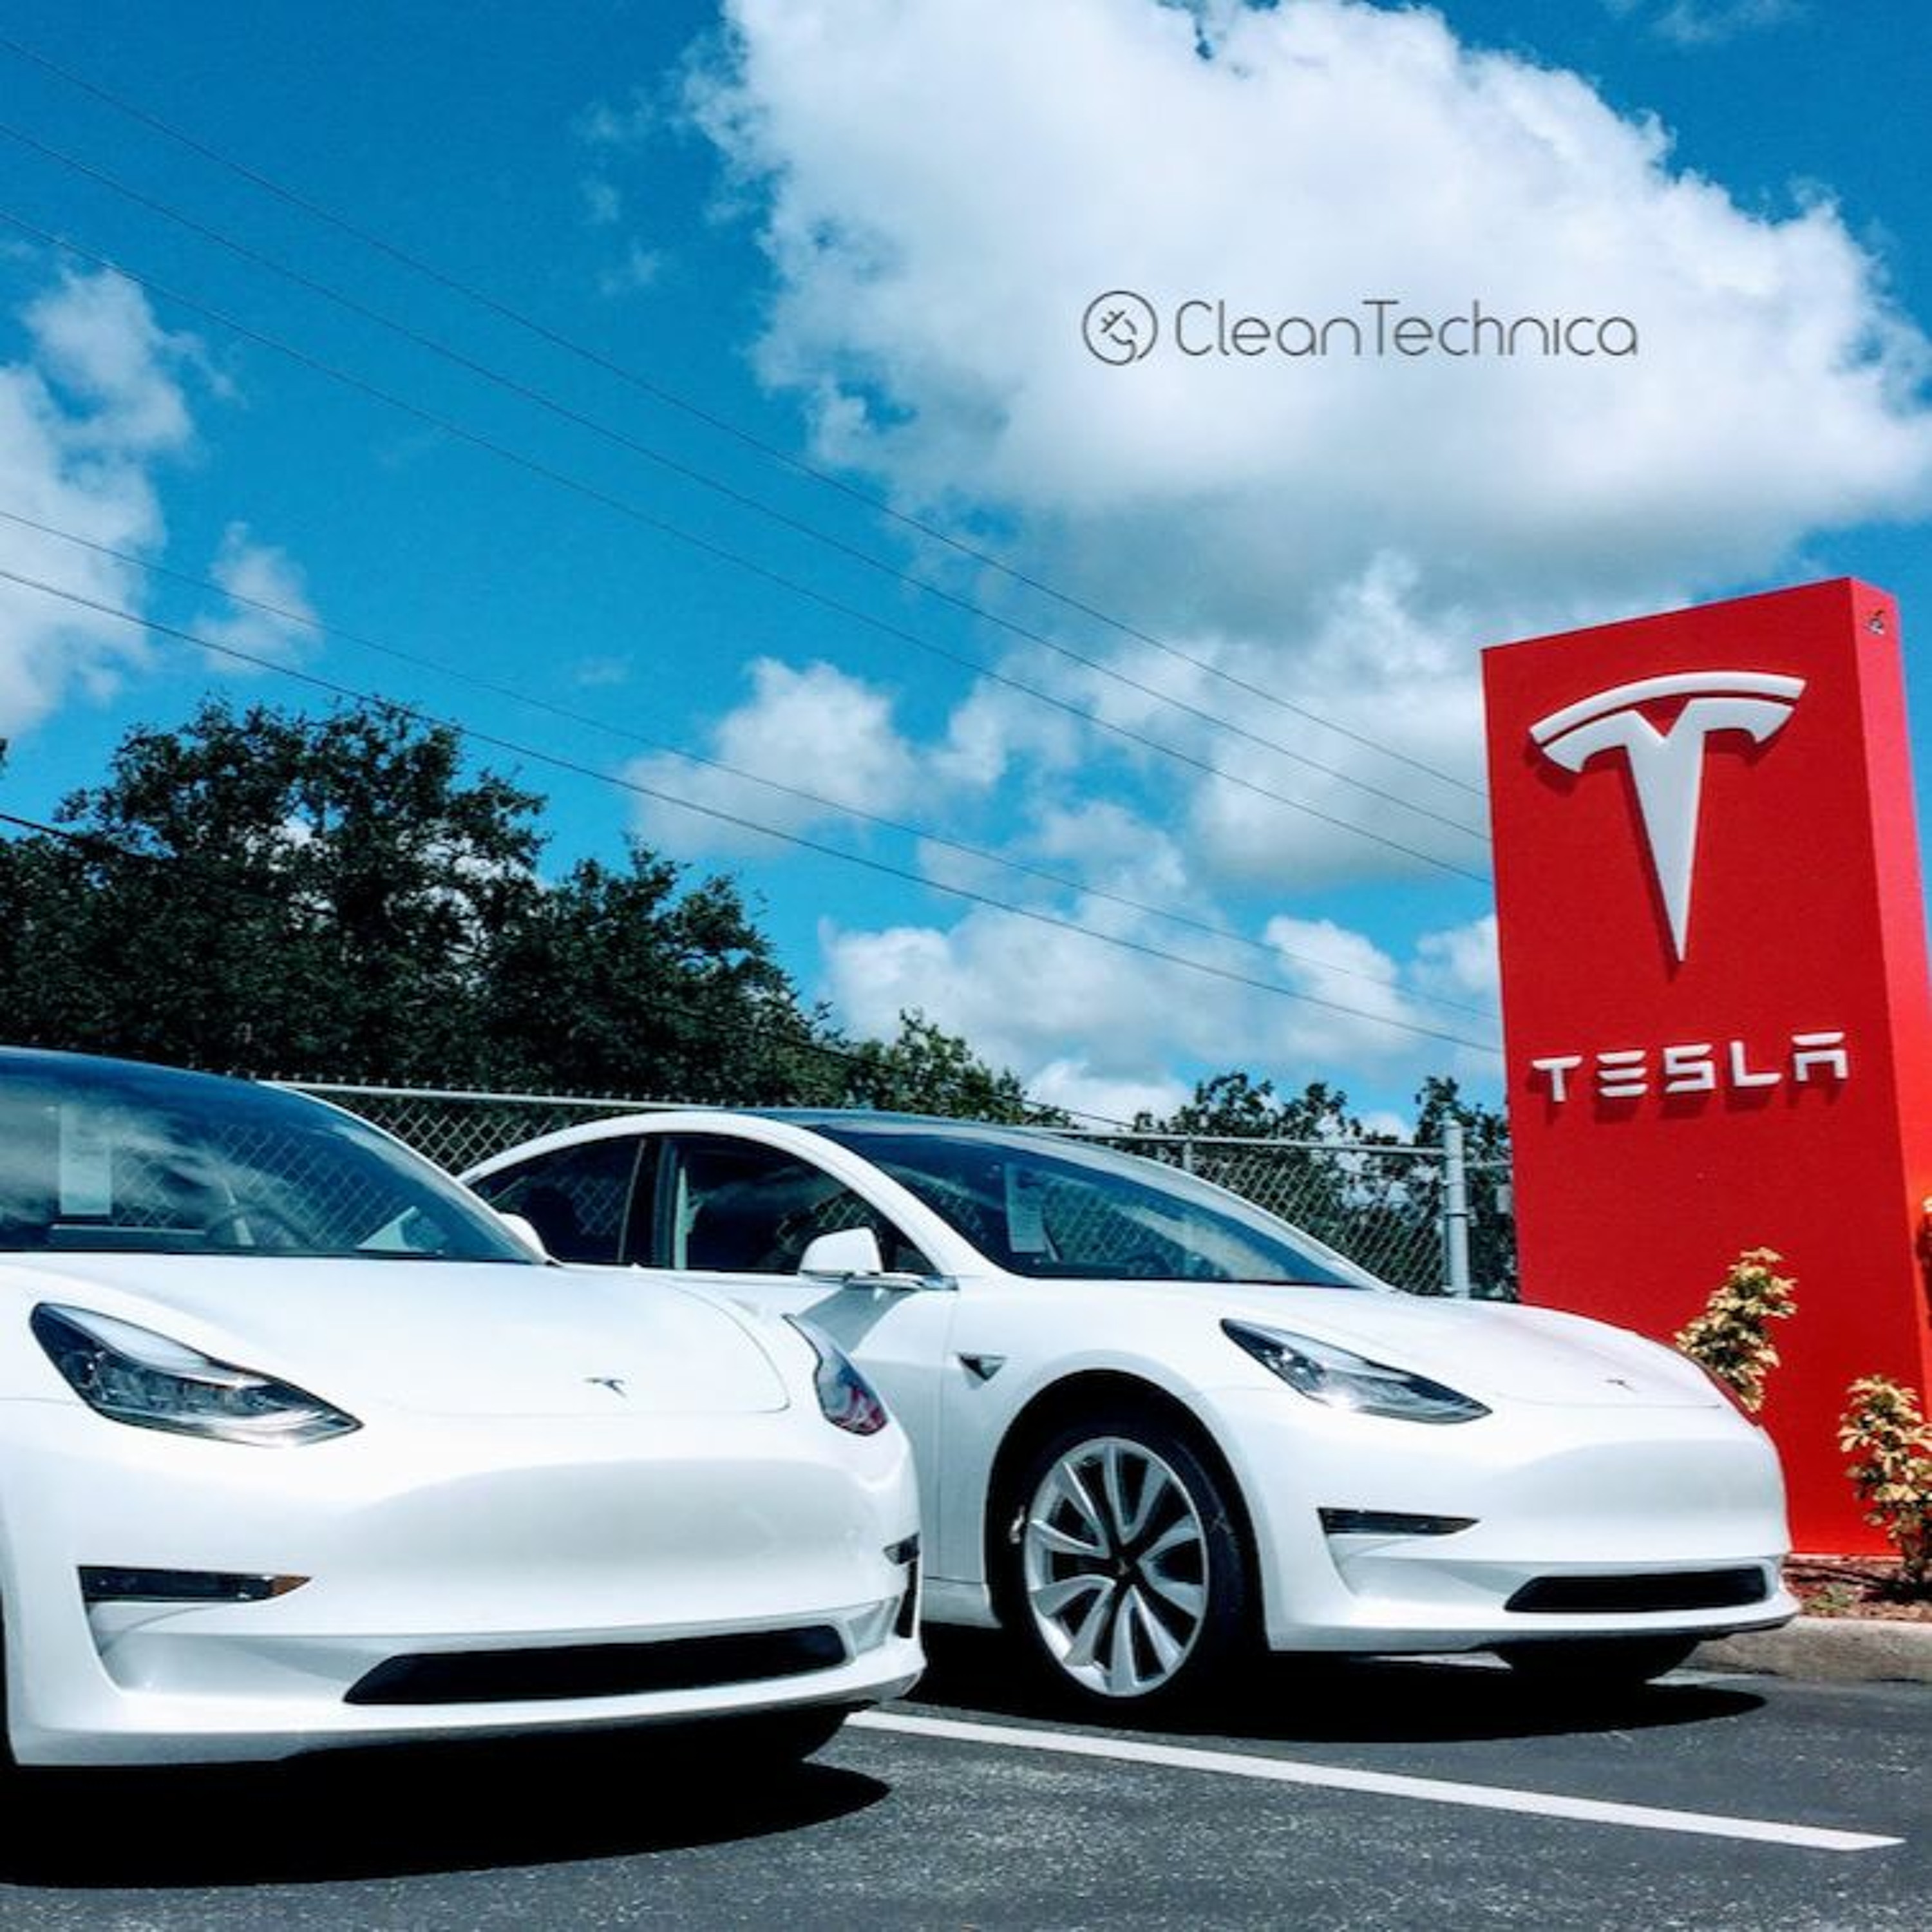 Tesla #2 in Auto Sales in California!